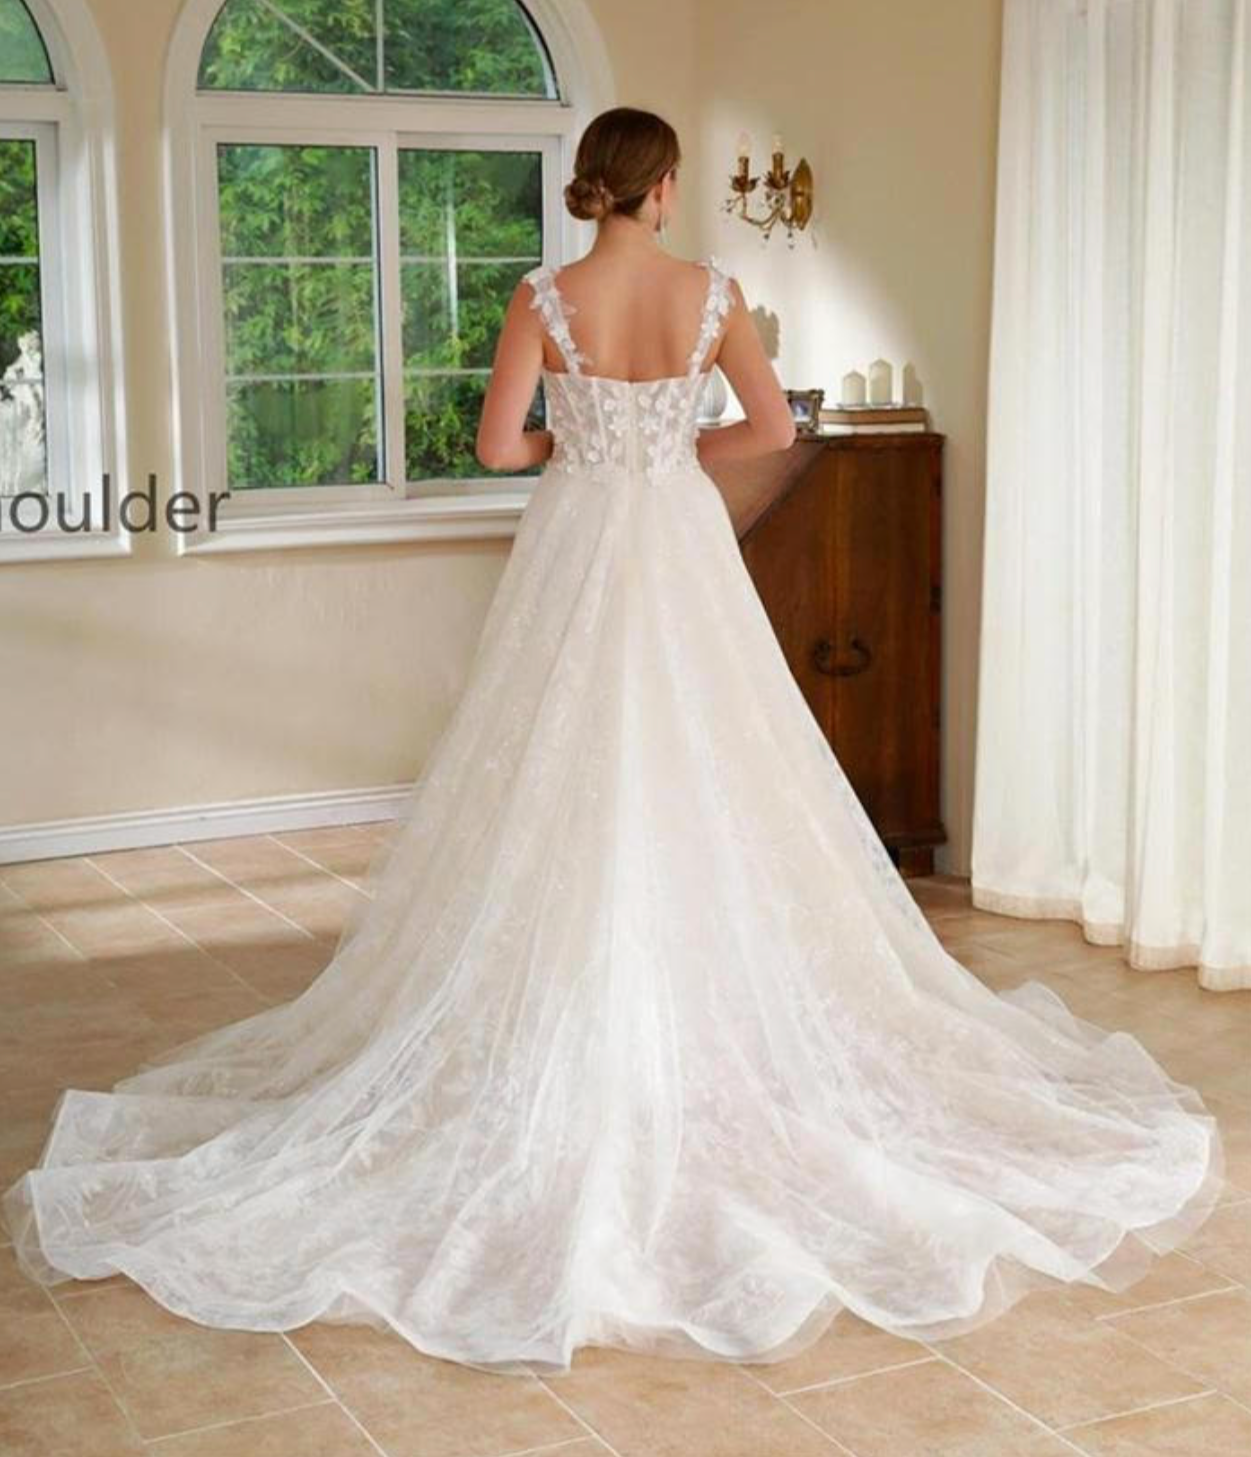 Lace A-Line Wedding Dress